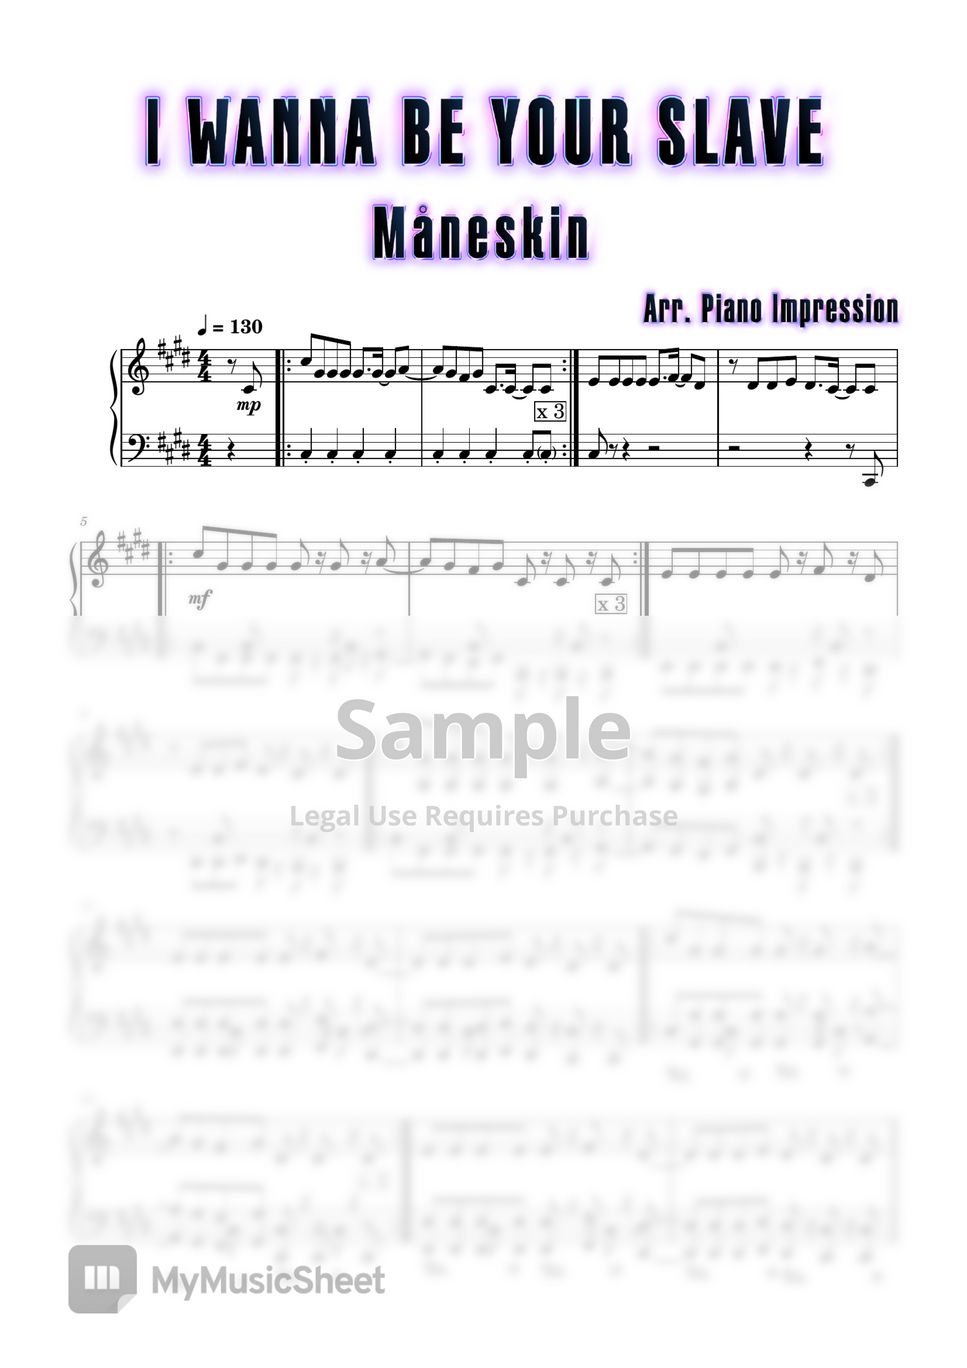 Måneskin - I WANNA BE YOUR SLAVE by Piano Impression